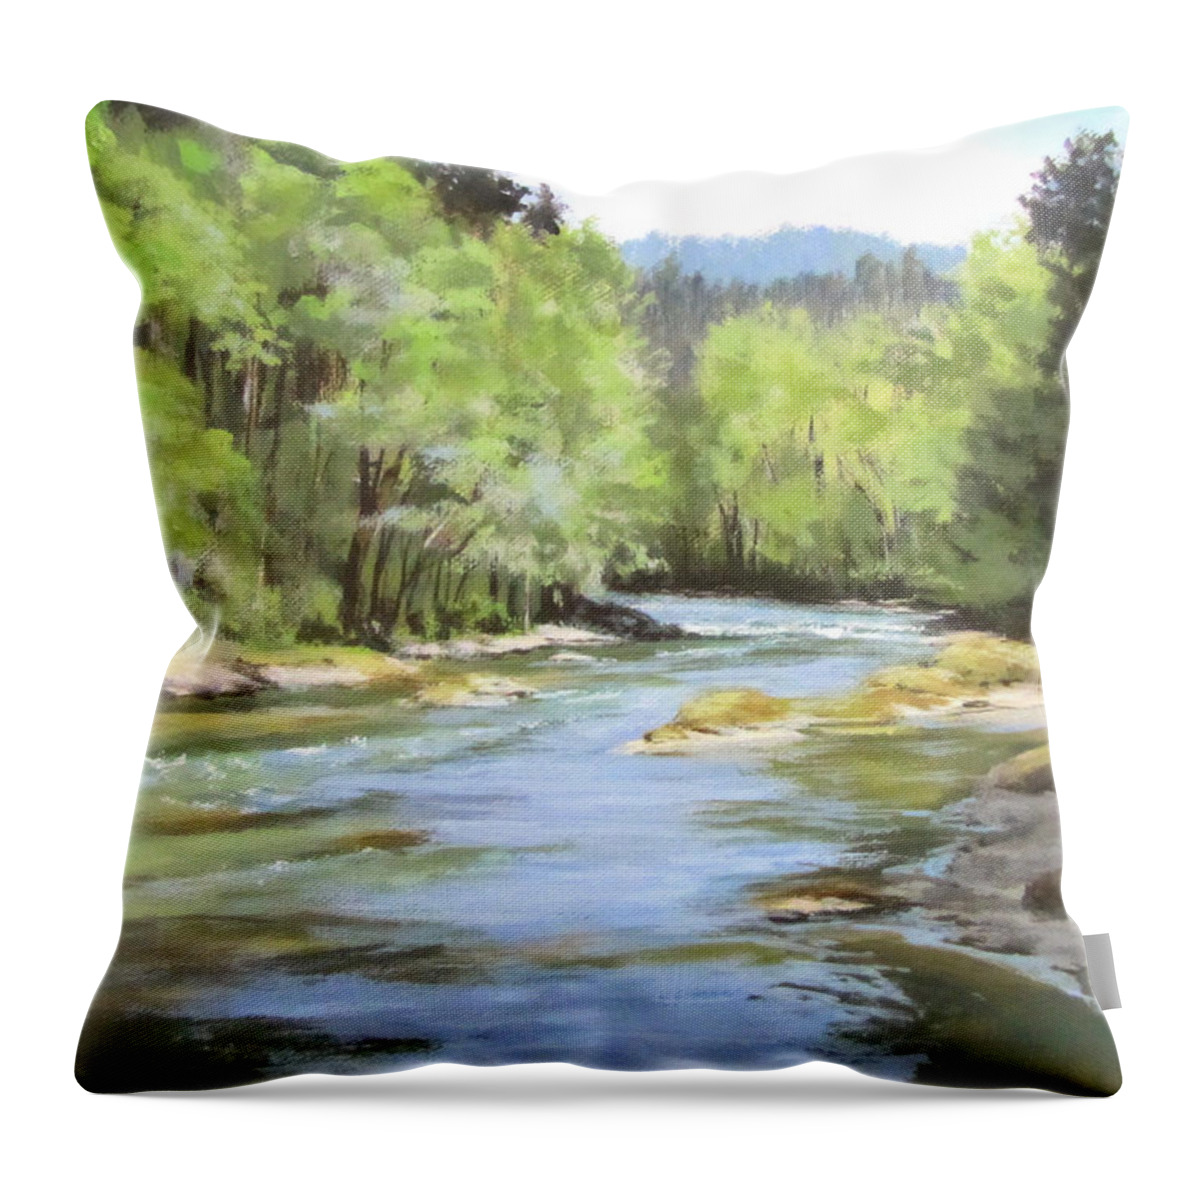 Original Throw Pillow featuring the painting Little River Morning by Karen Ilari